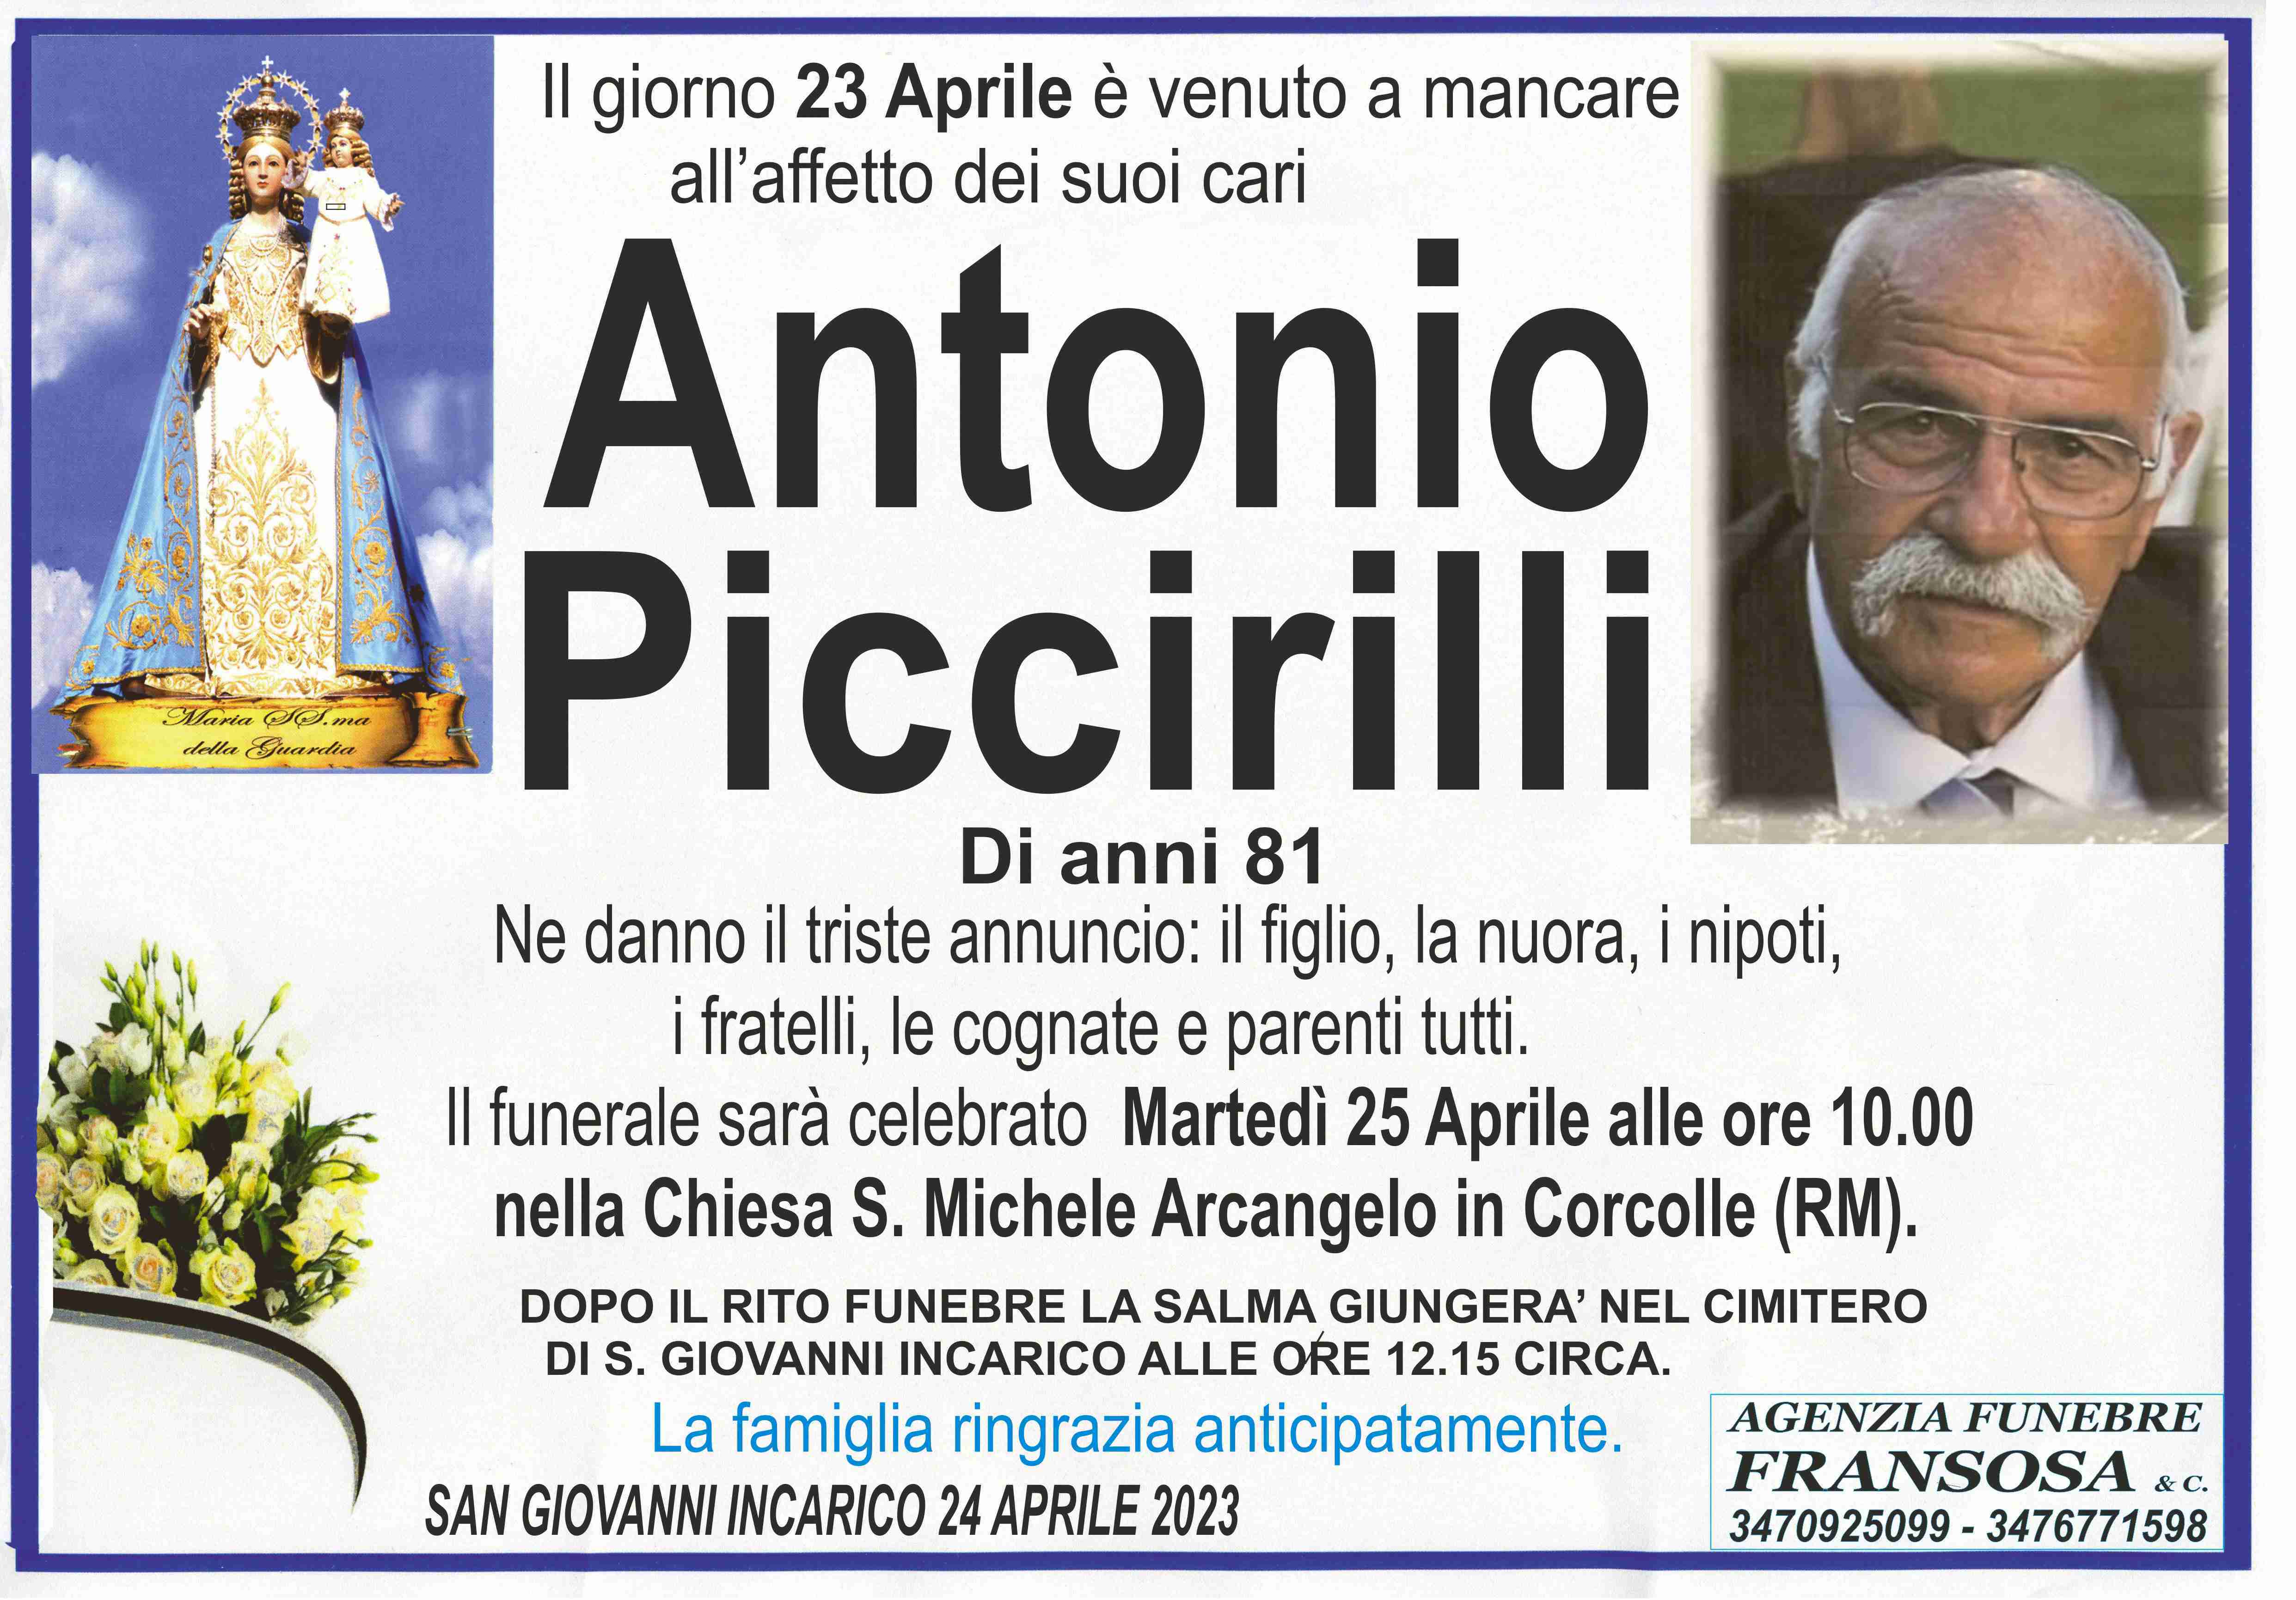 Antonio Piccirilli